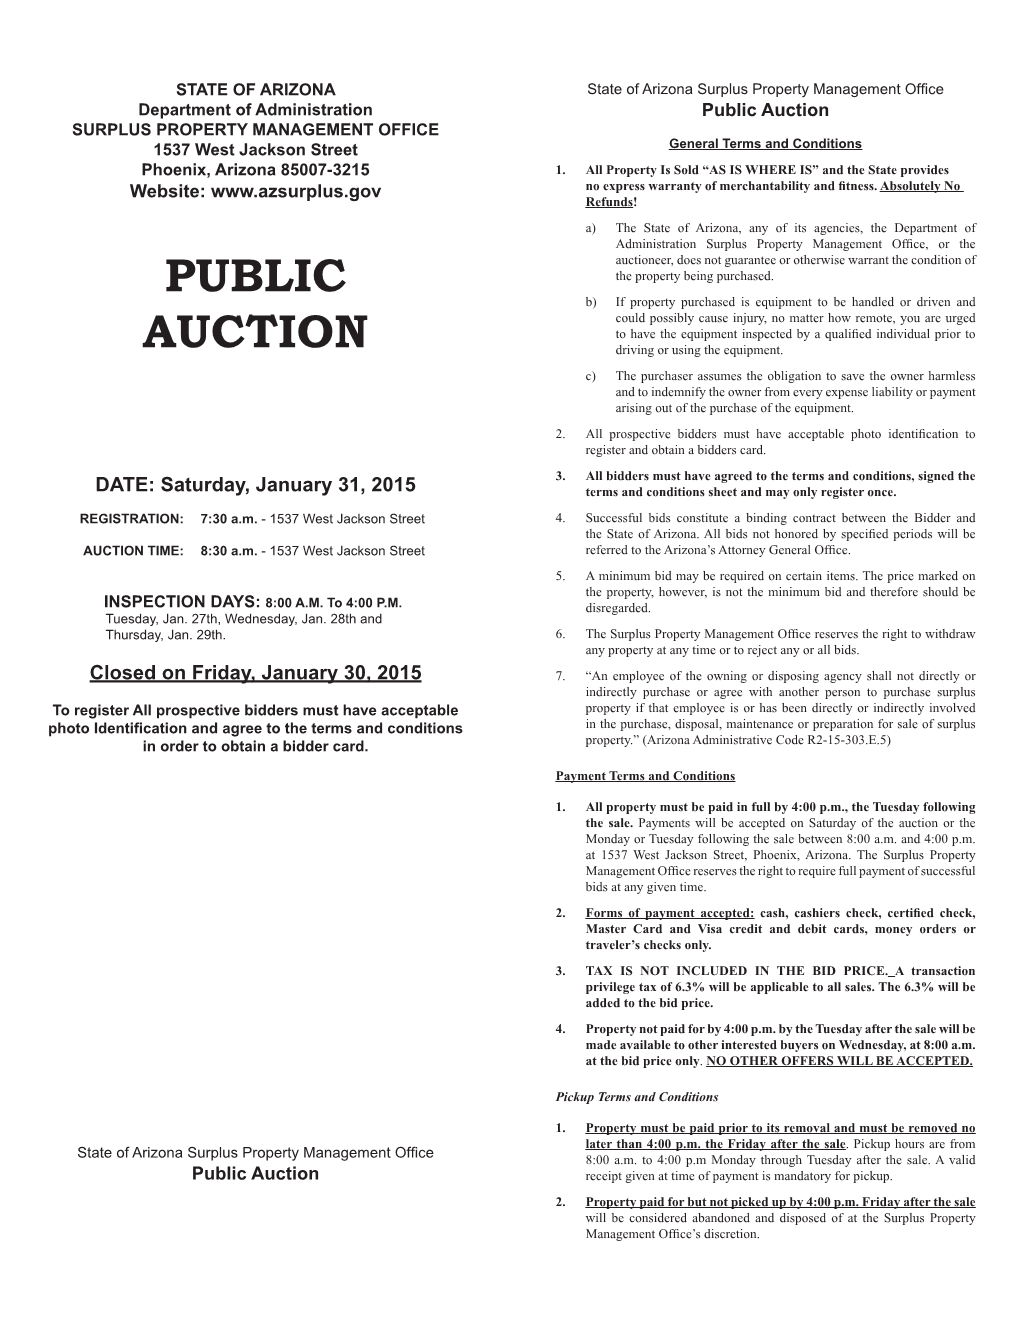 Public Auction SURPLUS PROPERTY MANAGEMENT OFFICE 1537 West Jackson Street General Terms and Conditions Phoenix, Arizona 85007-3215 1